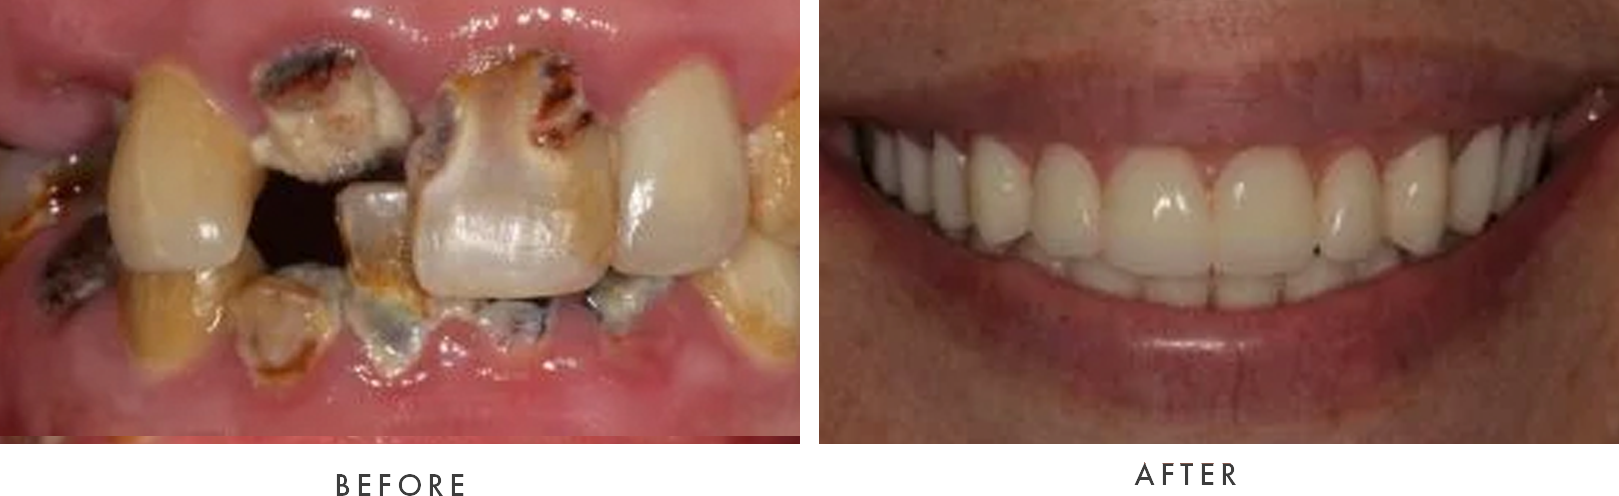 removable dentures combined case 3 drscruggs